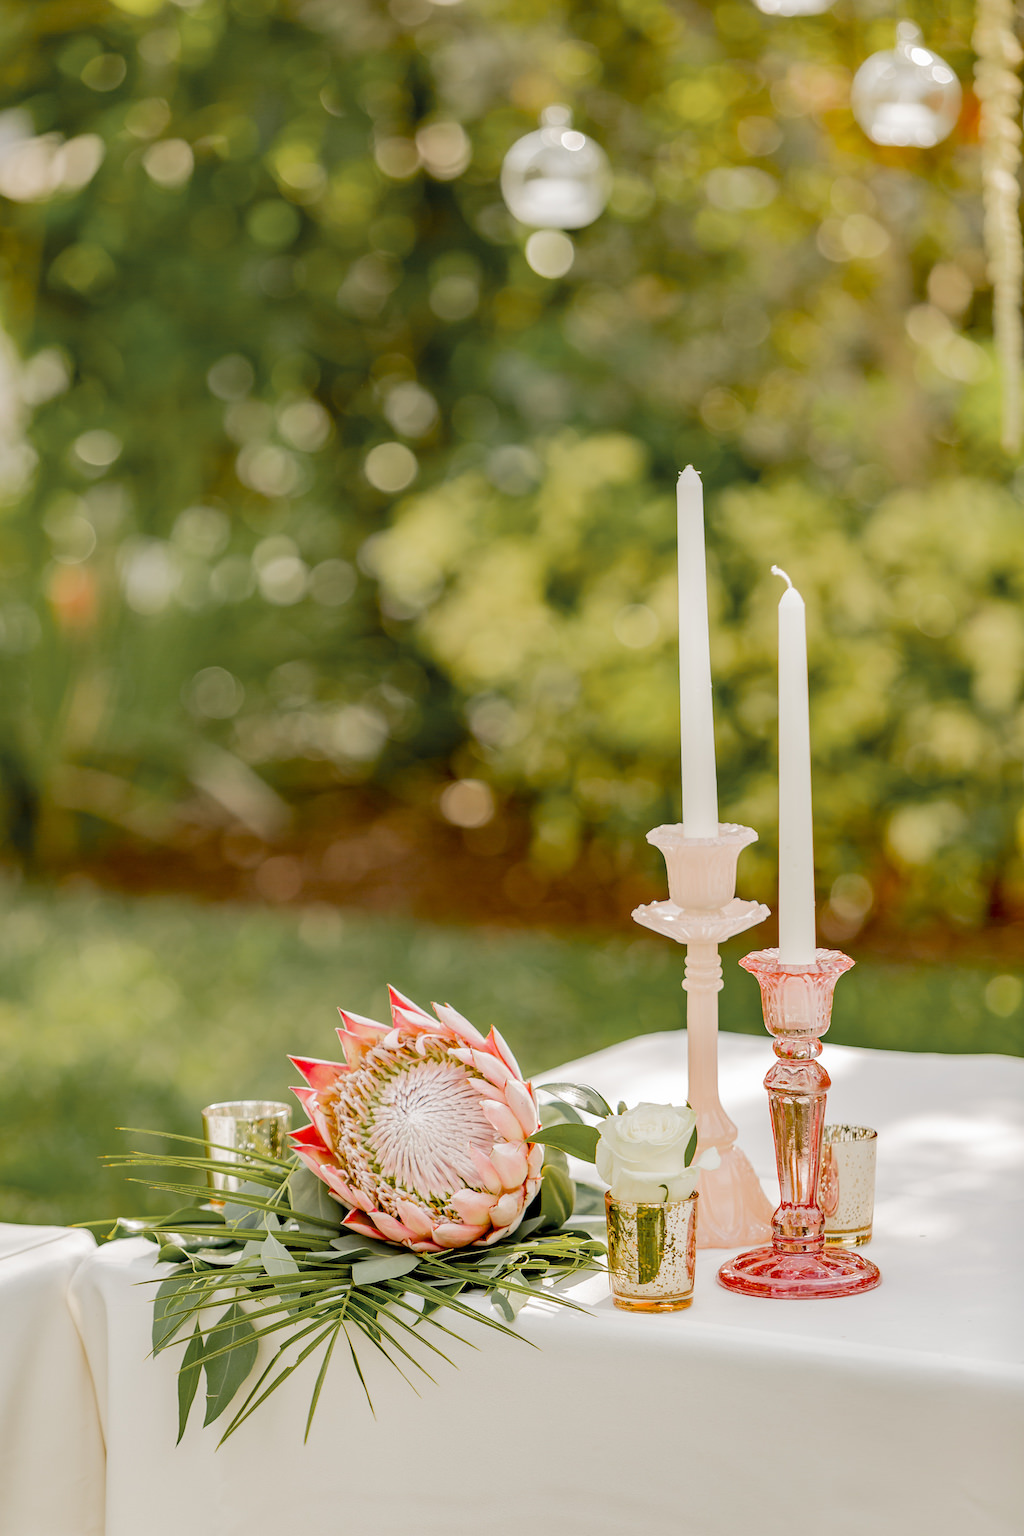 St. Pete Garden Wedding Reception Decor, King Protea Flower and Eucalyptus with Pink Glass Candlesticks